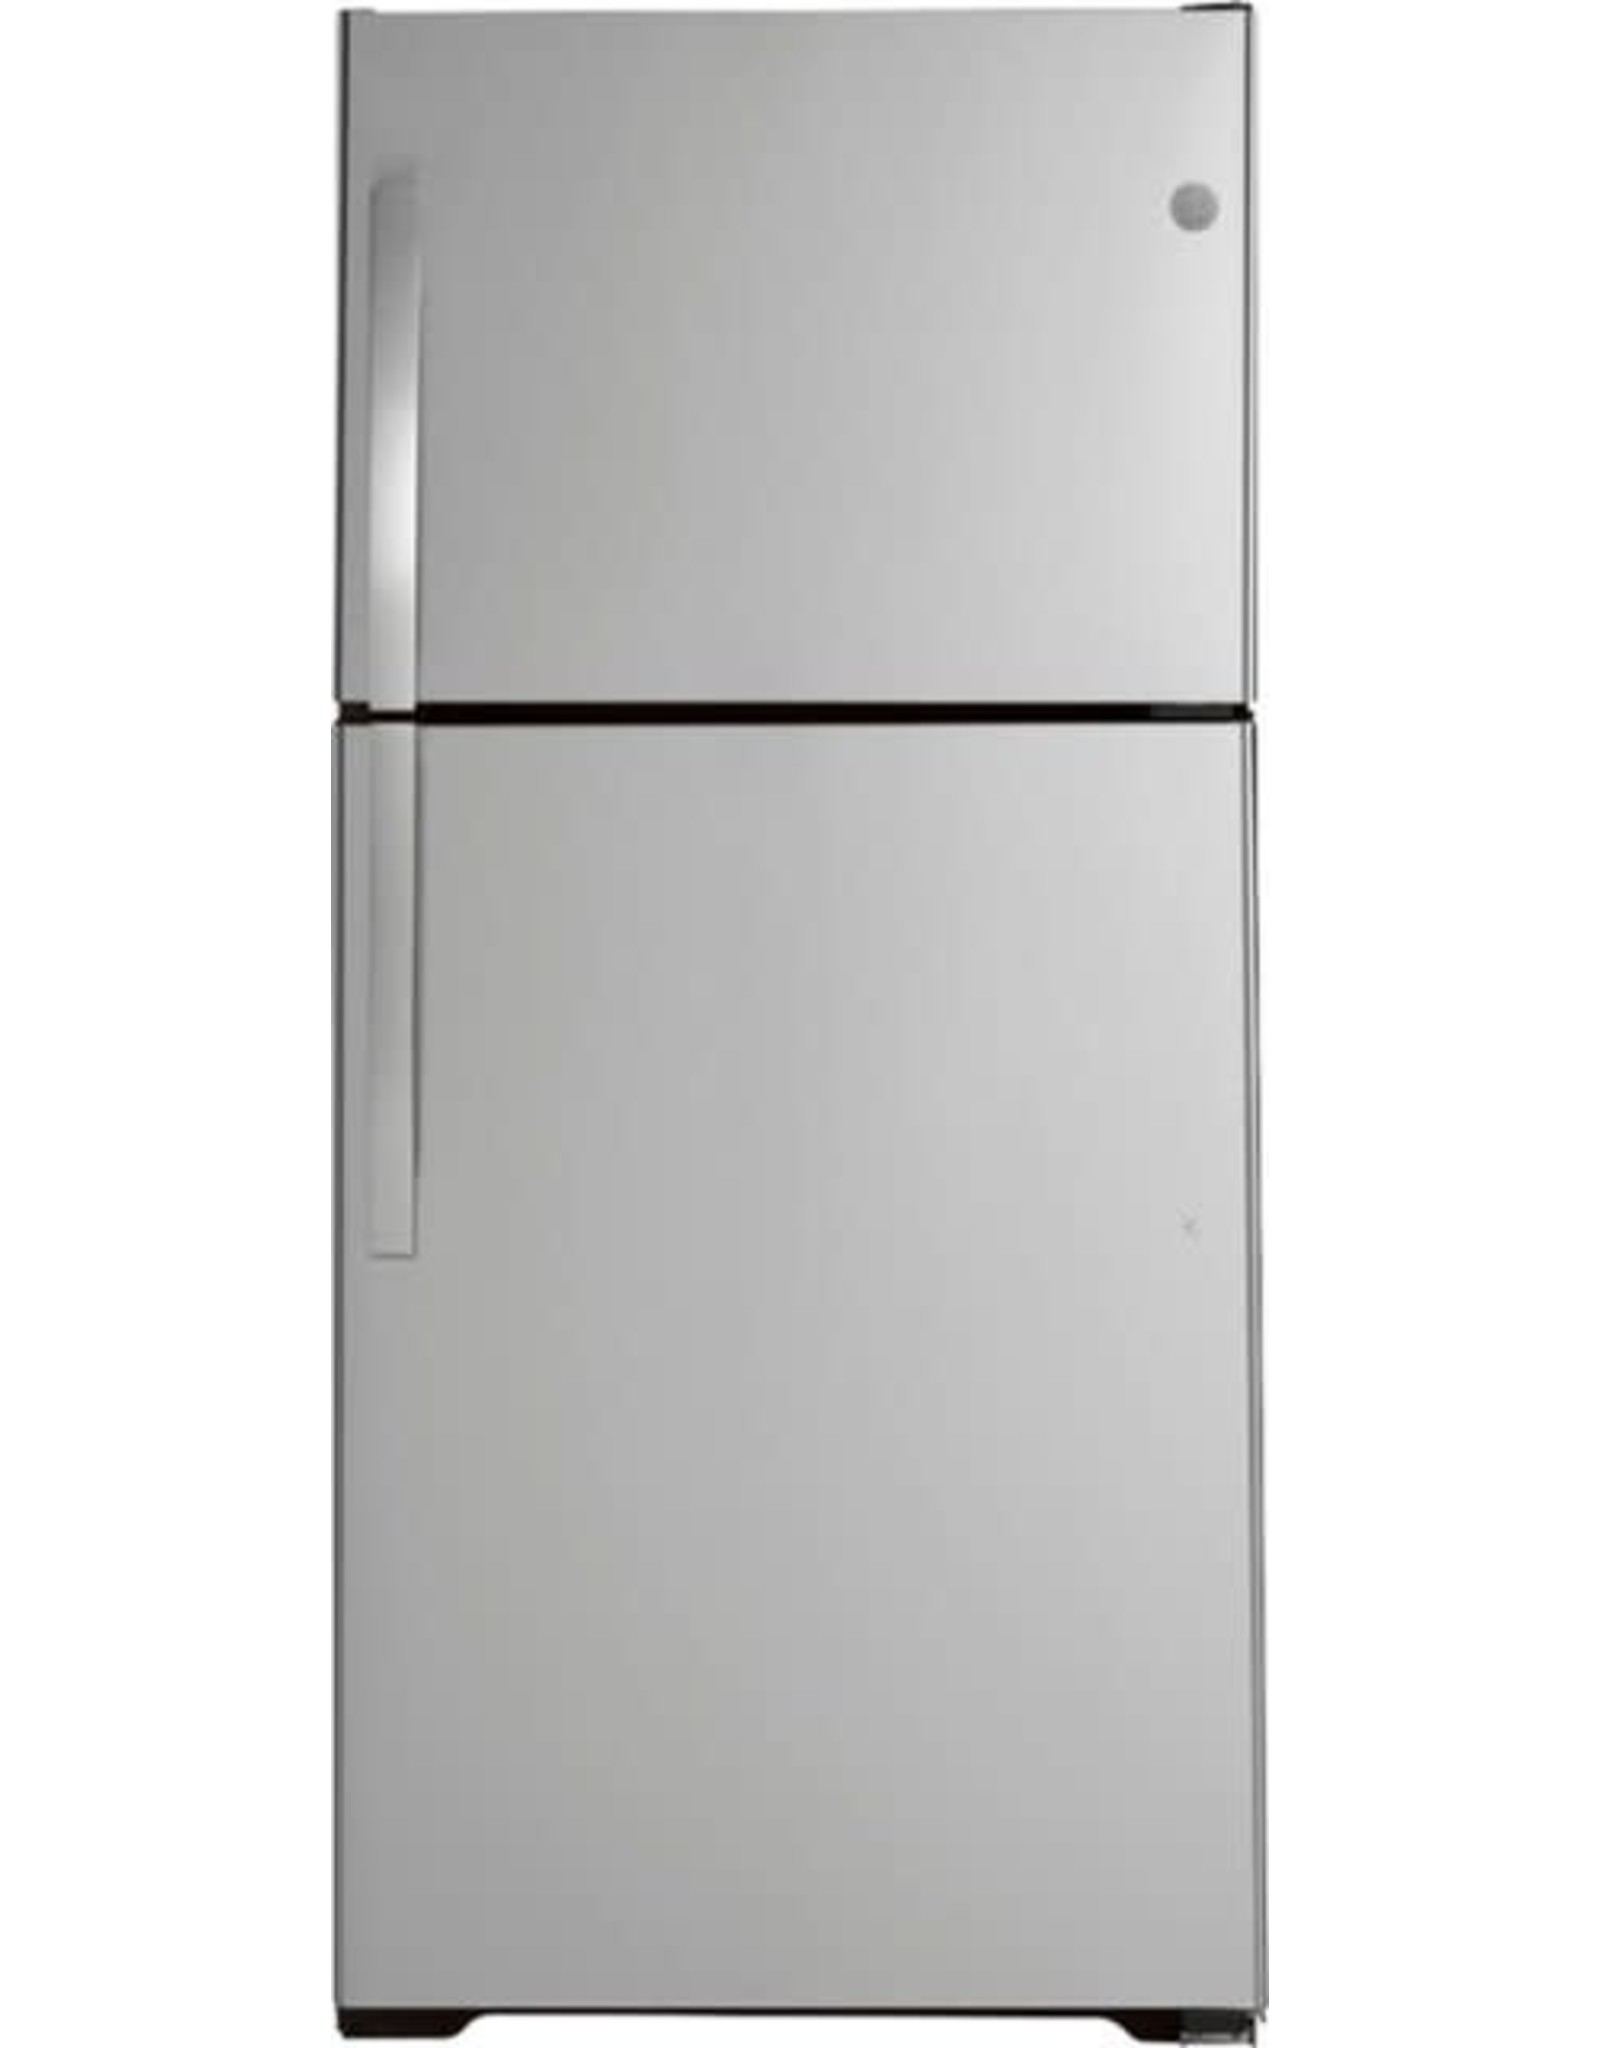 GE GTS22KSNRSS 21.9 cu. ft. Top Freezer Refrigerator in Stainless Steel